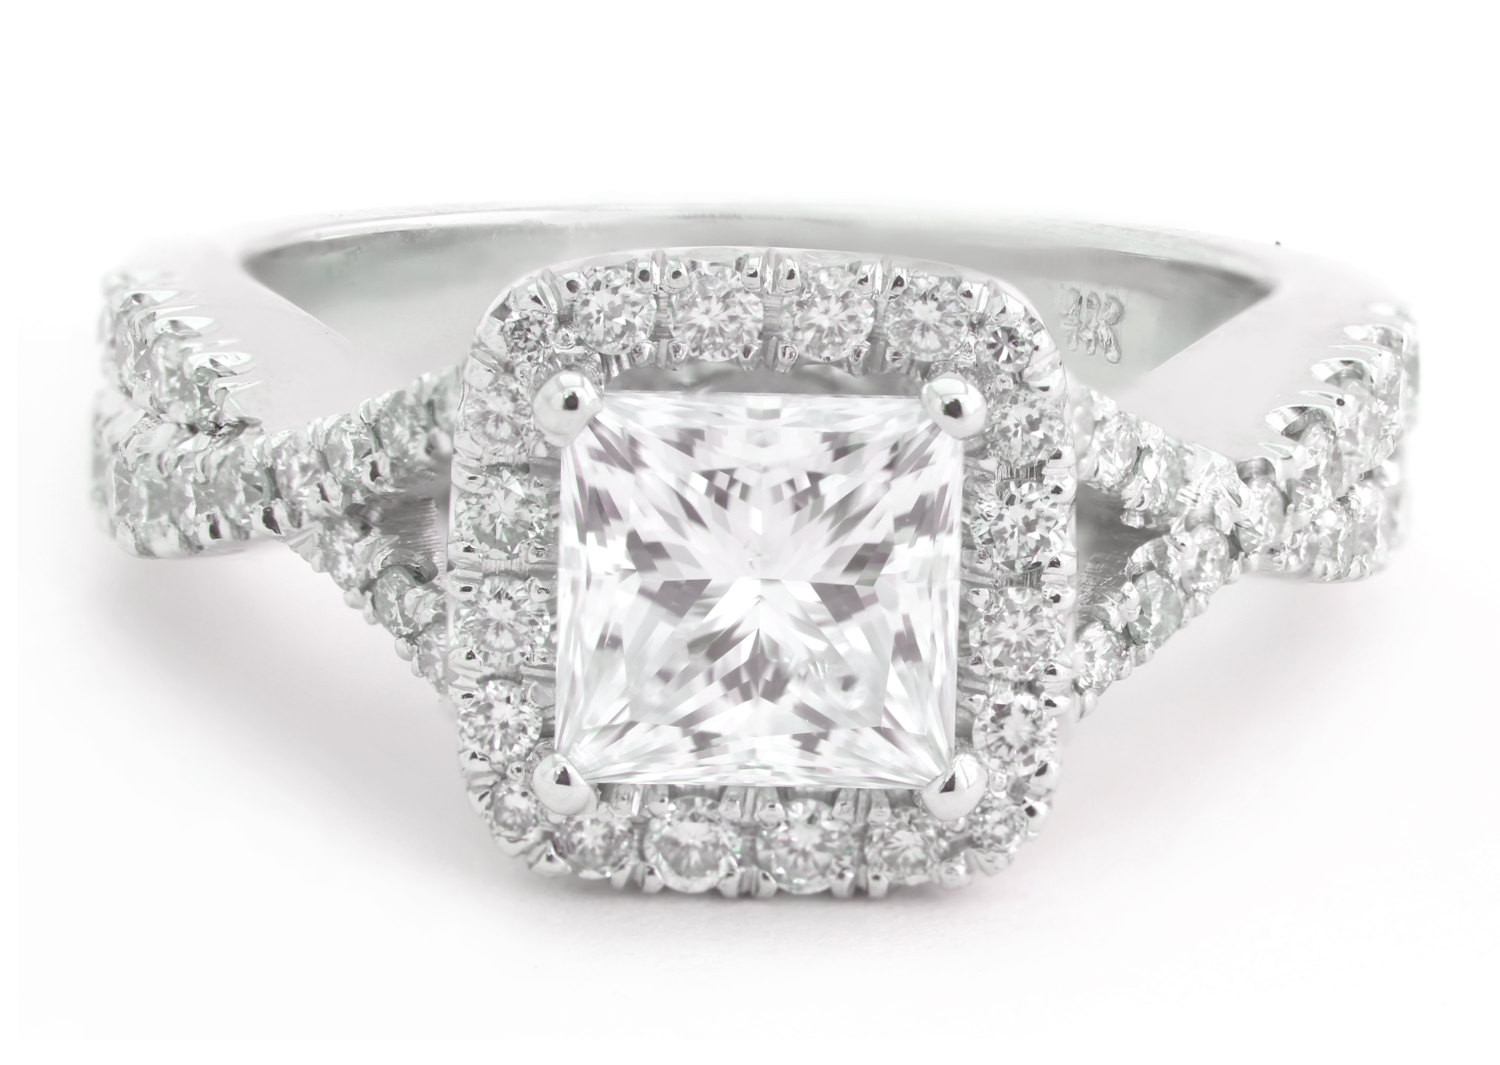 Vera Wang Princess Cut Engagement Rings
 Vera Wang style inspired princess cut diamond by